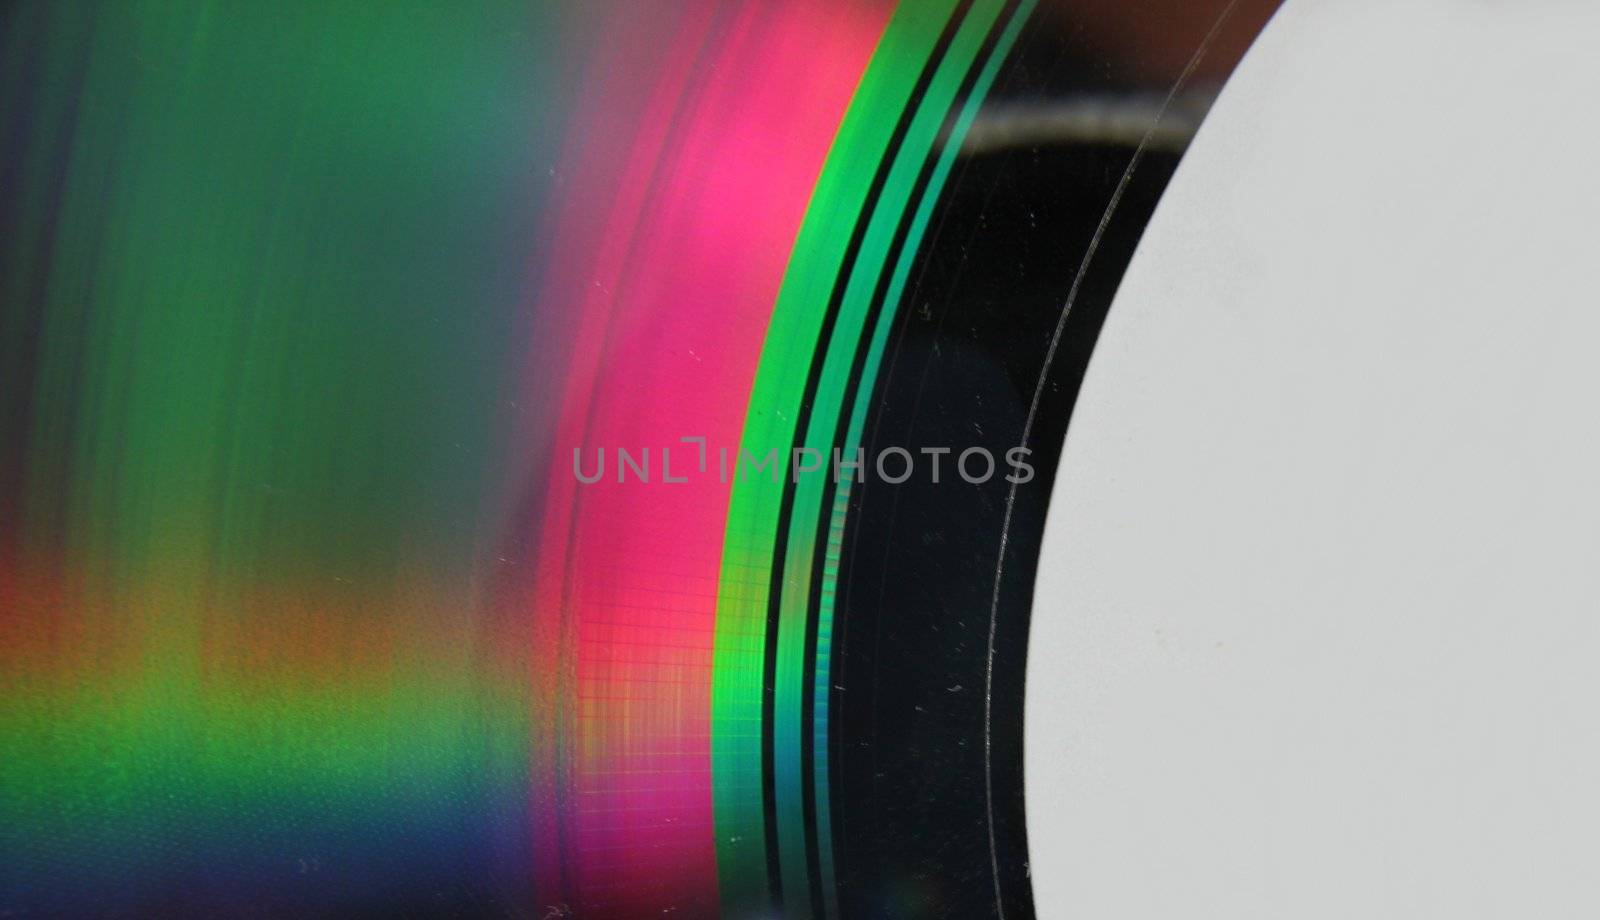 Details of grooves found on an old laser disk